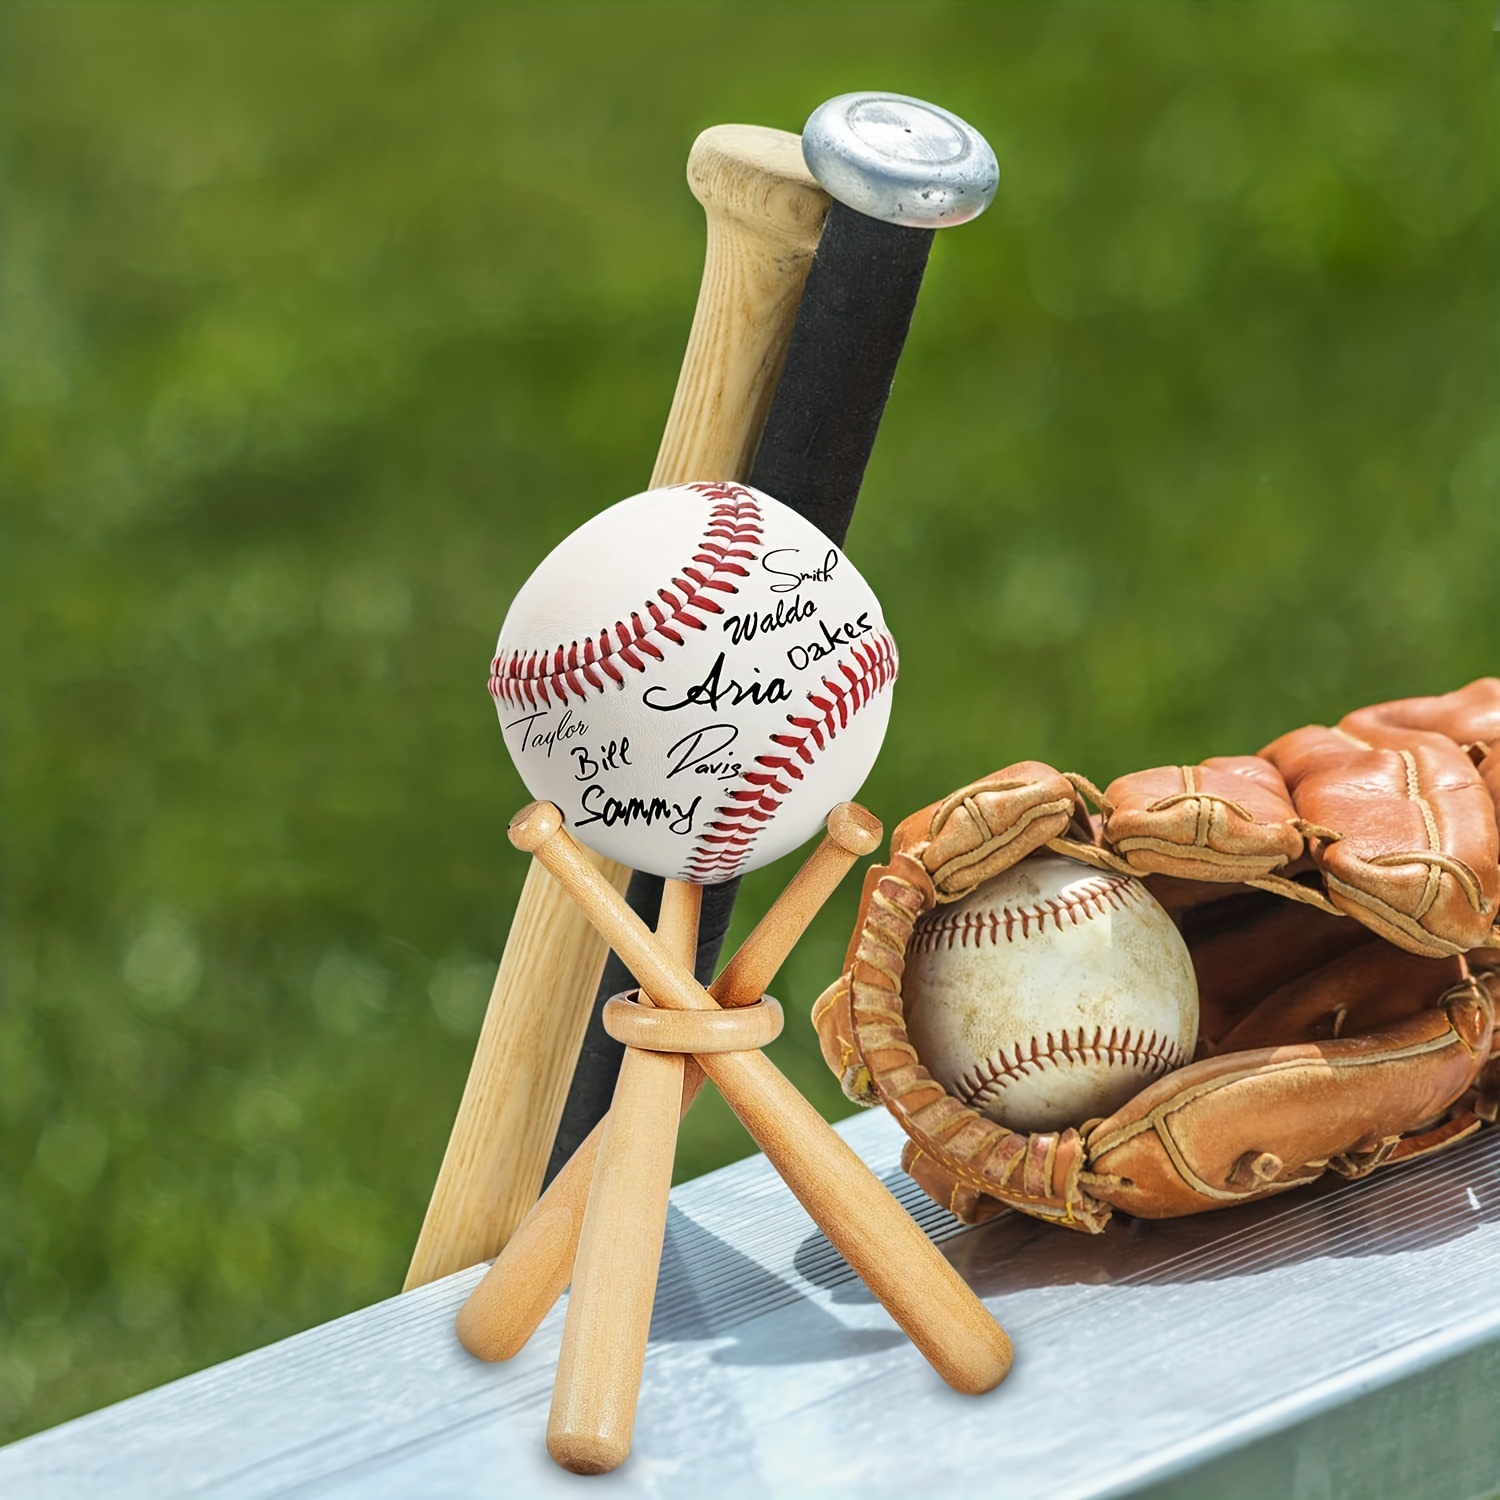 Batte de Baseball vintage en bois